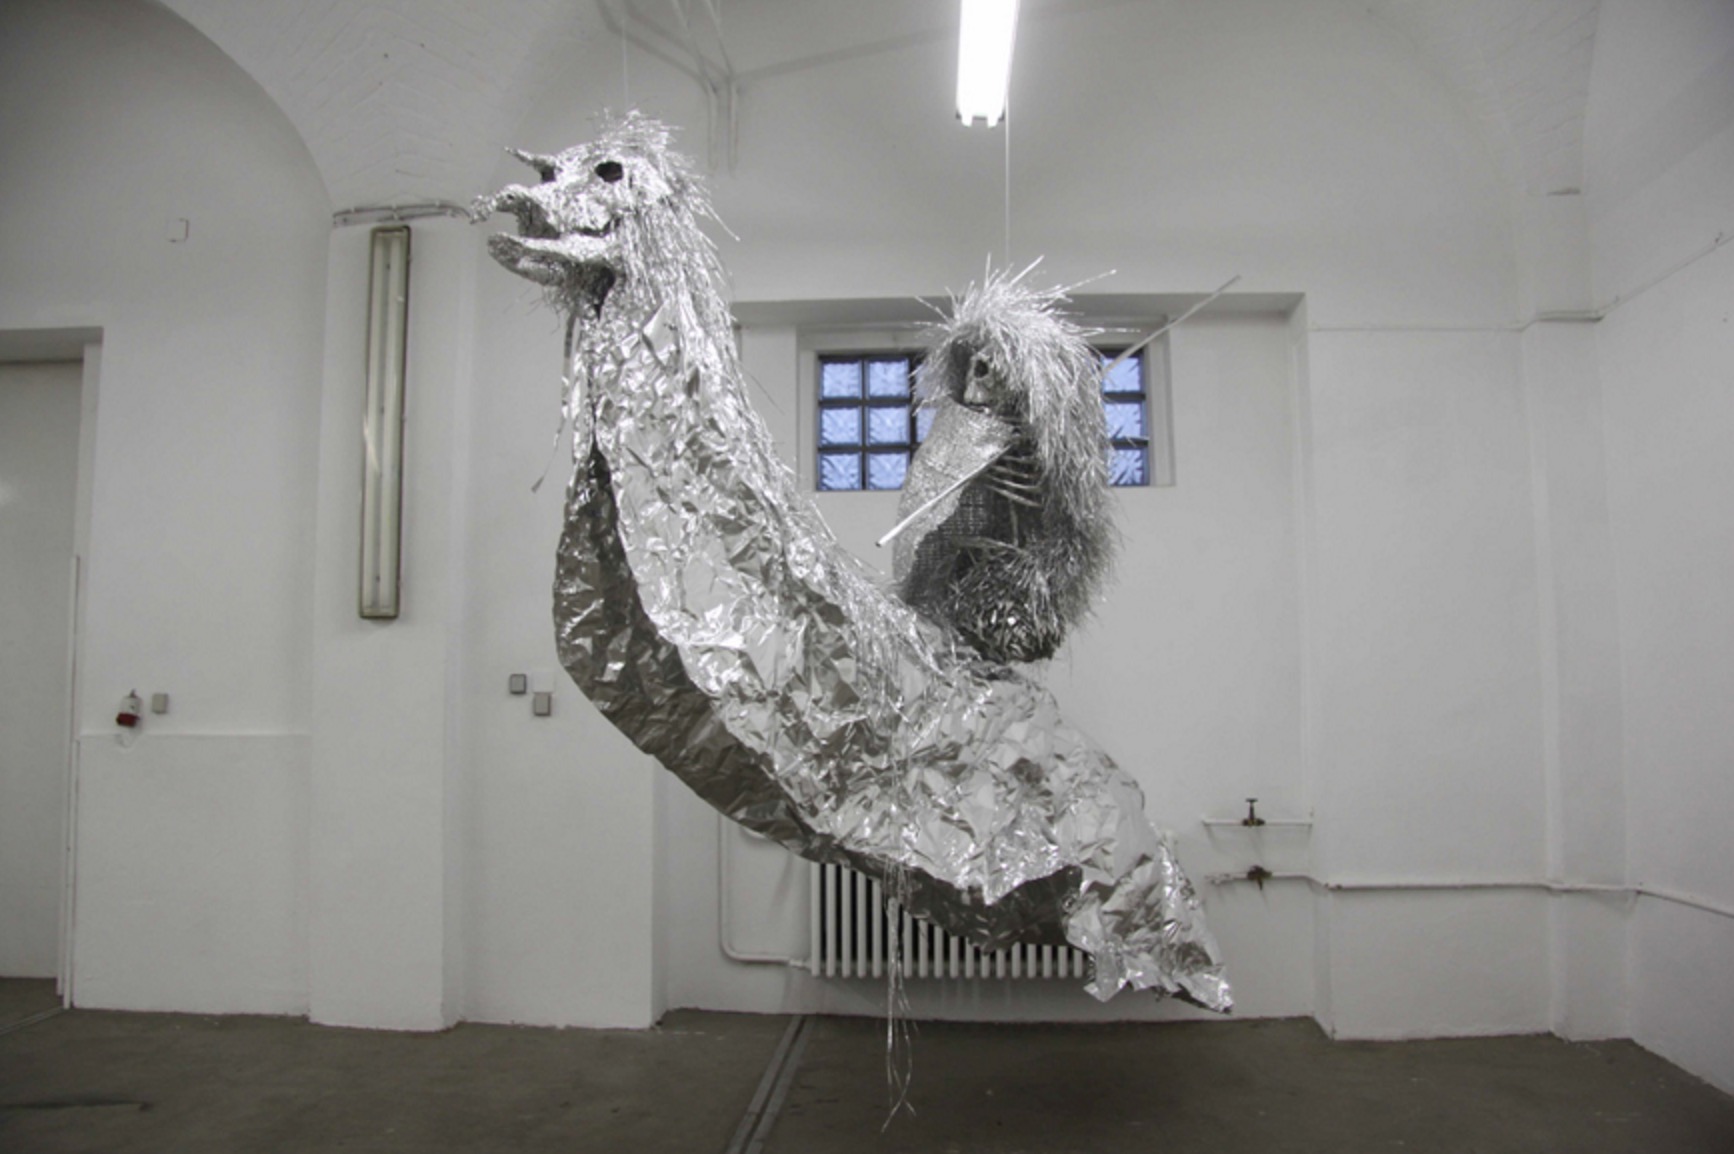 Aluminum Foil Sculptures by Toshihiko Mistuya - Artist Run Website